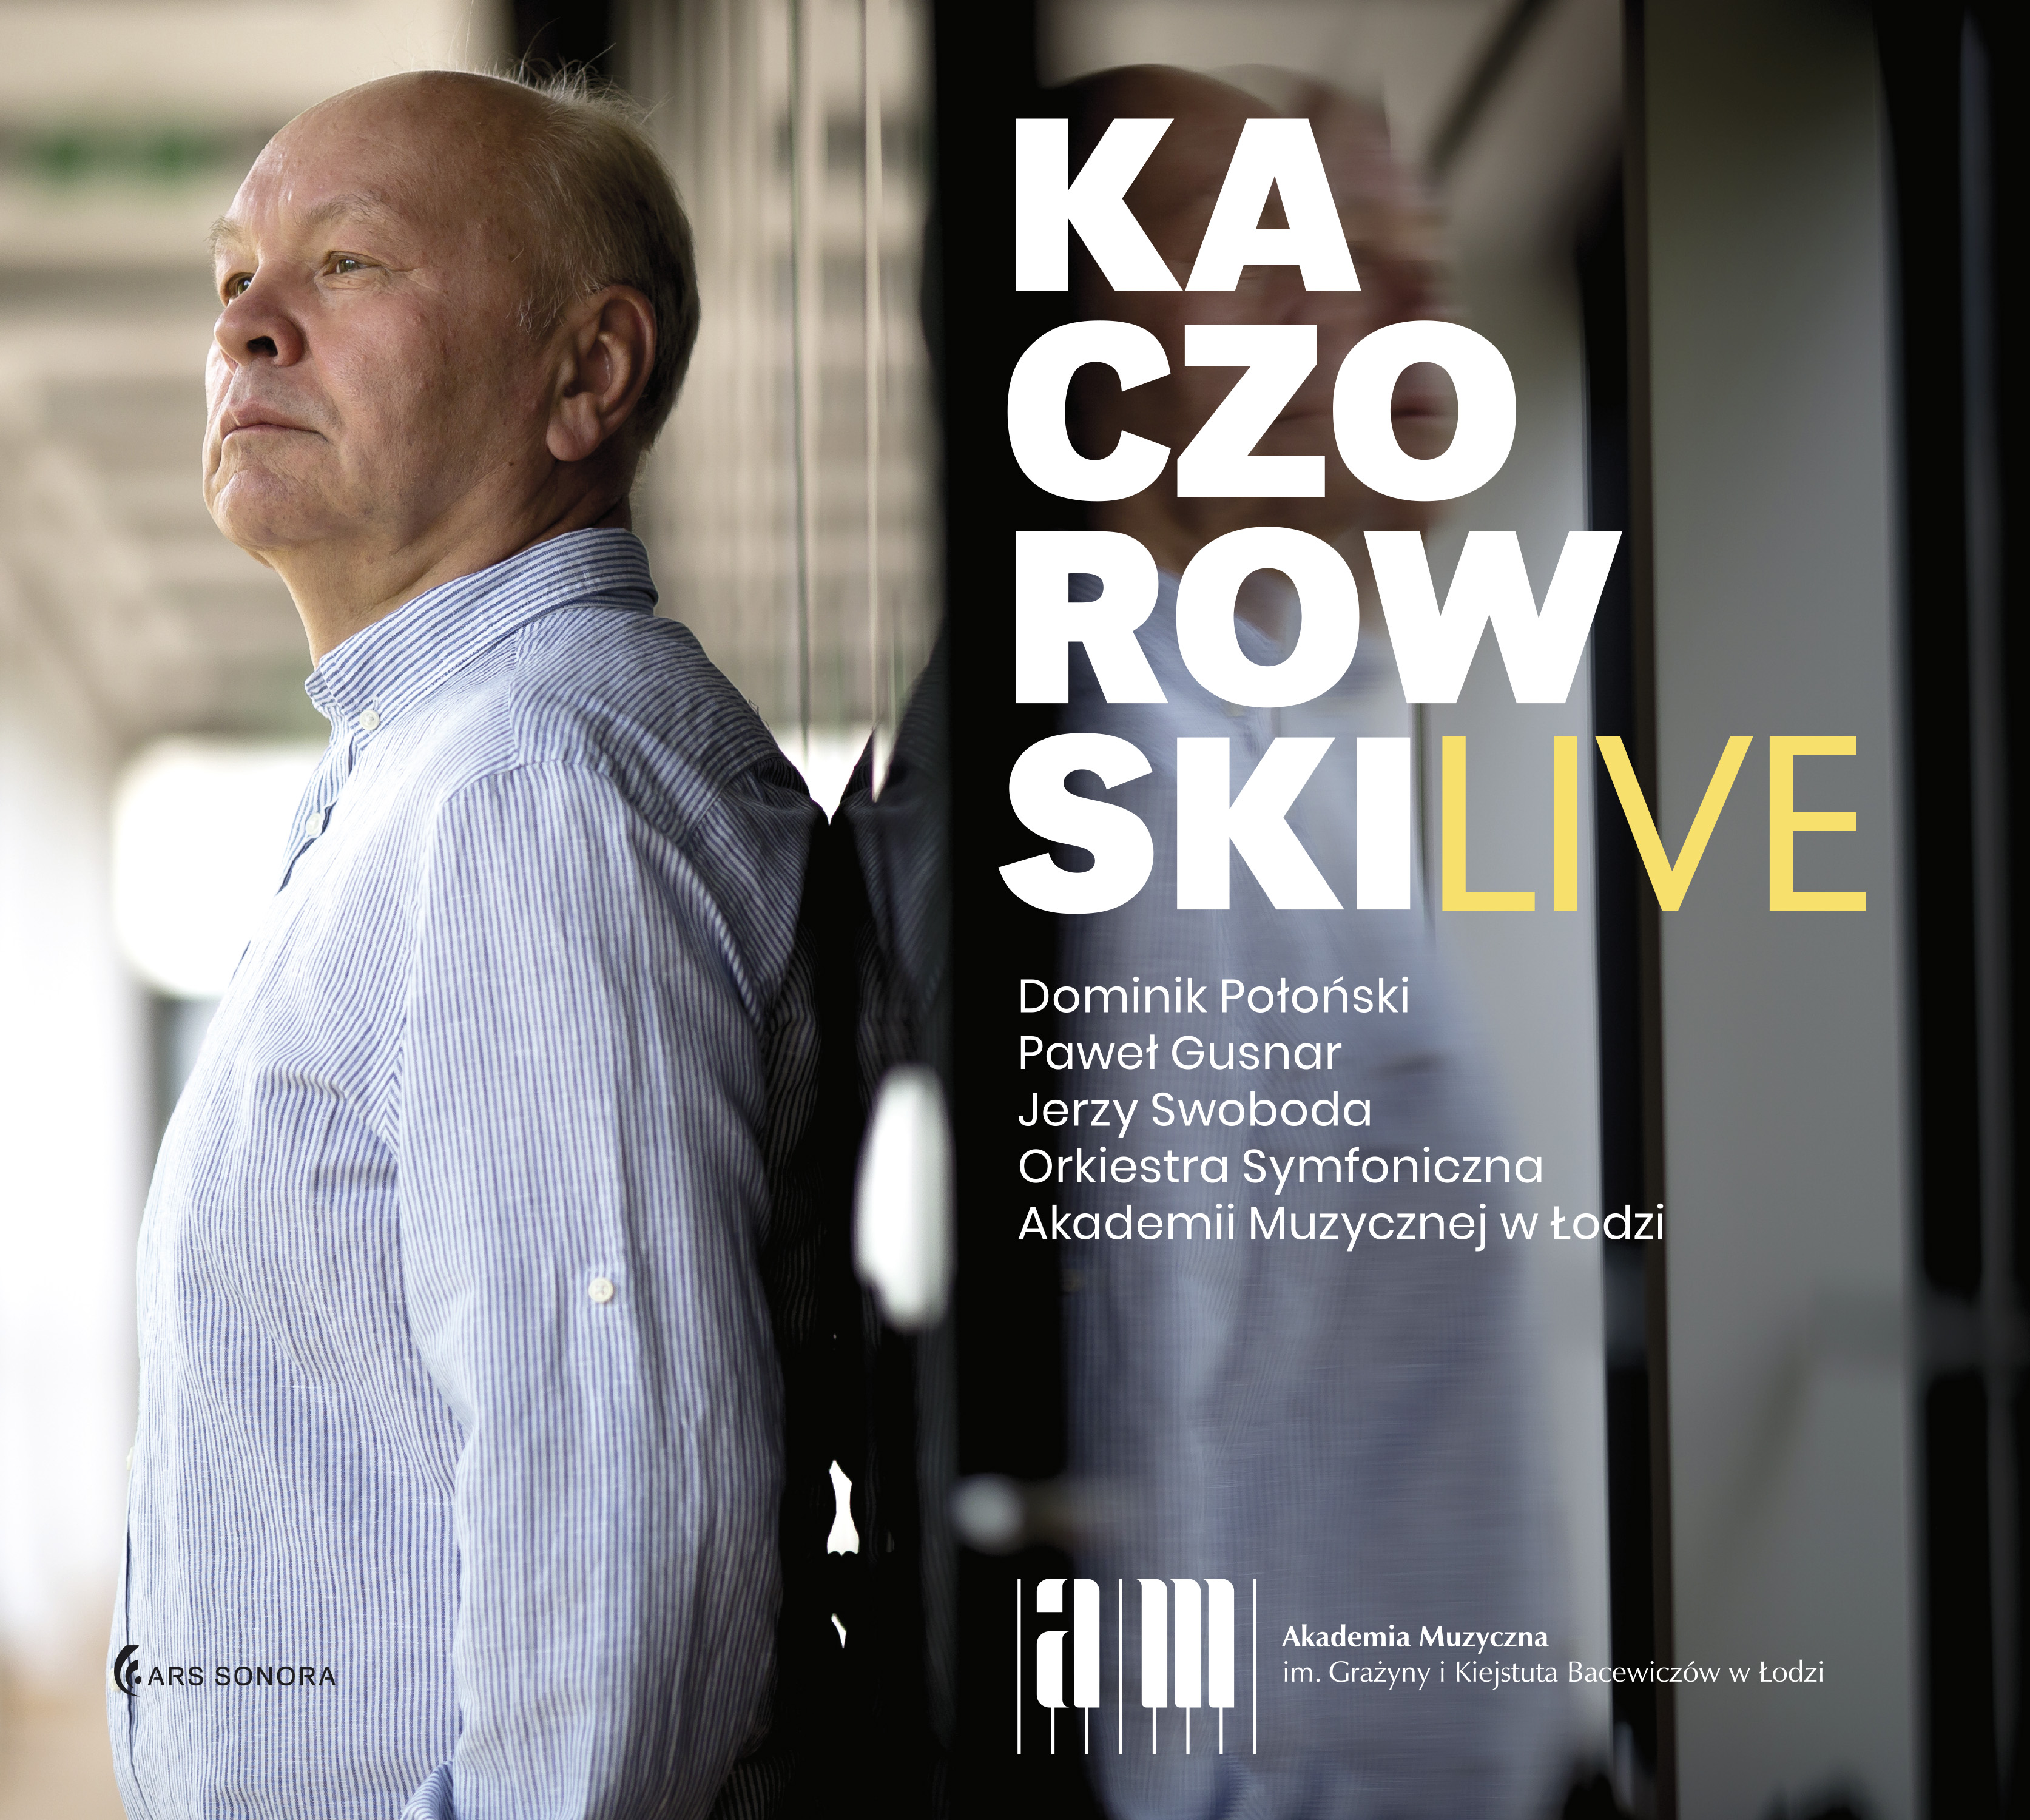 Kaczorowski Live